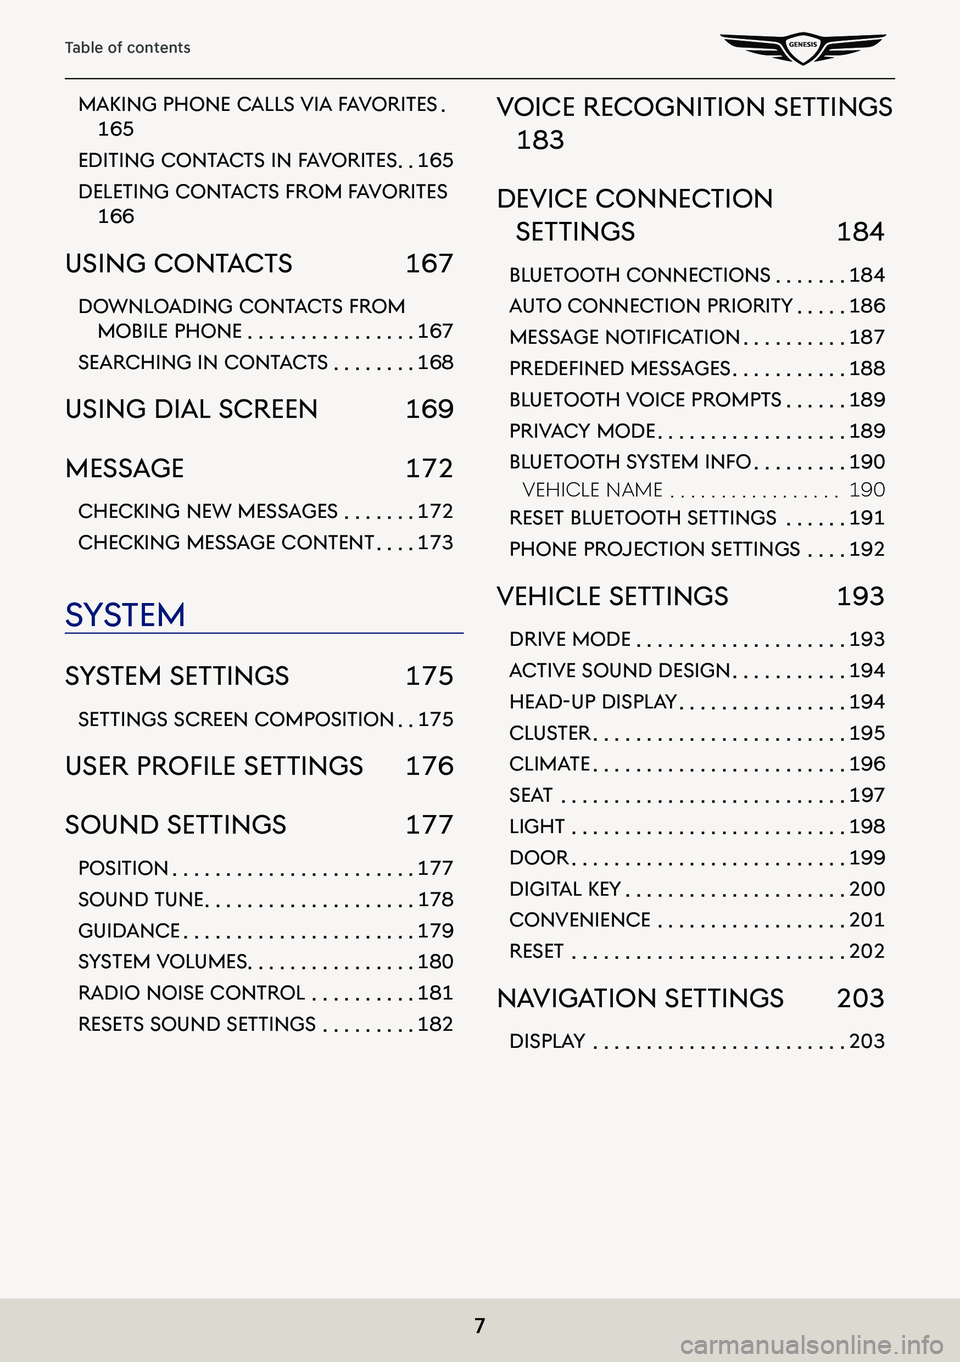 GENESIS G80 2021  Premium Navigation Manual 7
Table of contents
maKing phone calls Via faV oriTes  .
165
ediTing conT acTs in f aV oriTes  . .165
deleTing conT acTs from f aV oriTes 
166
using conT acTs  167
downloading conT acTs from 
mobile p